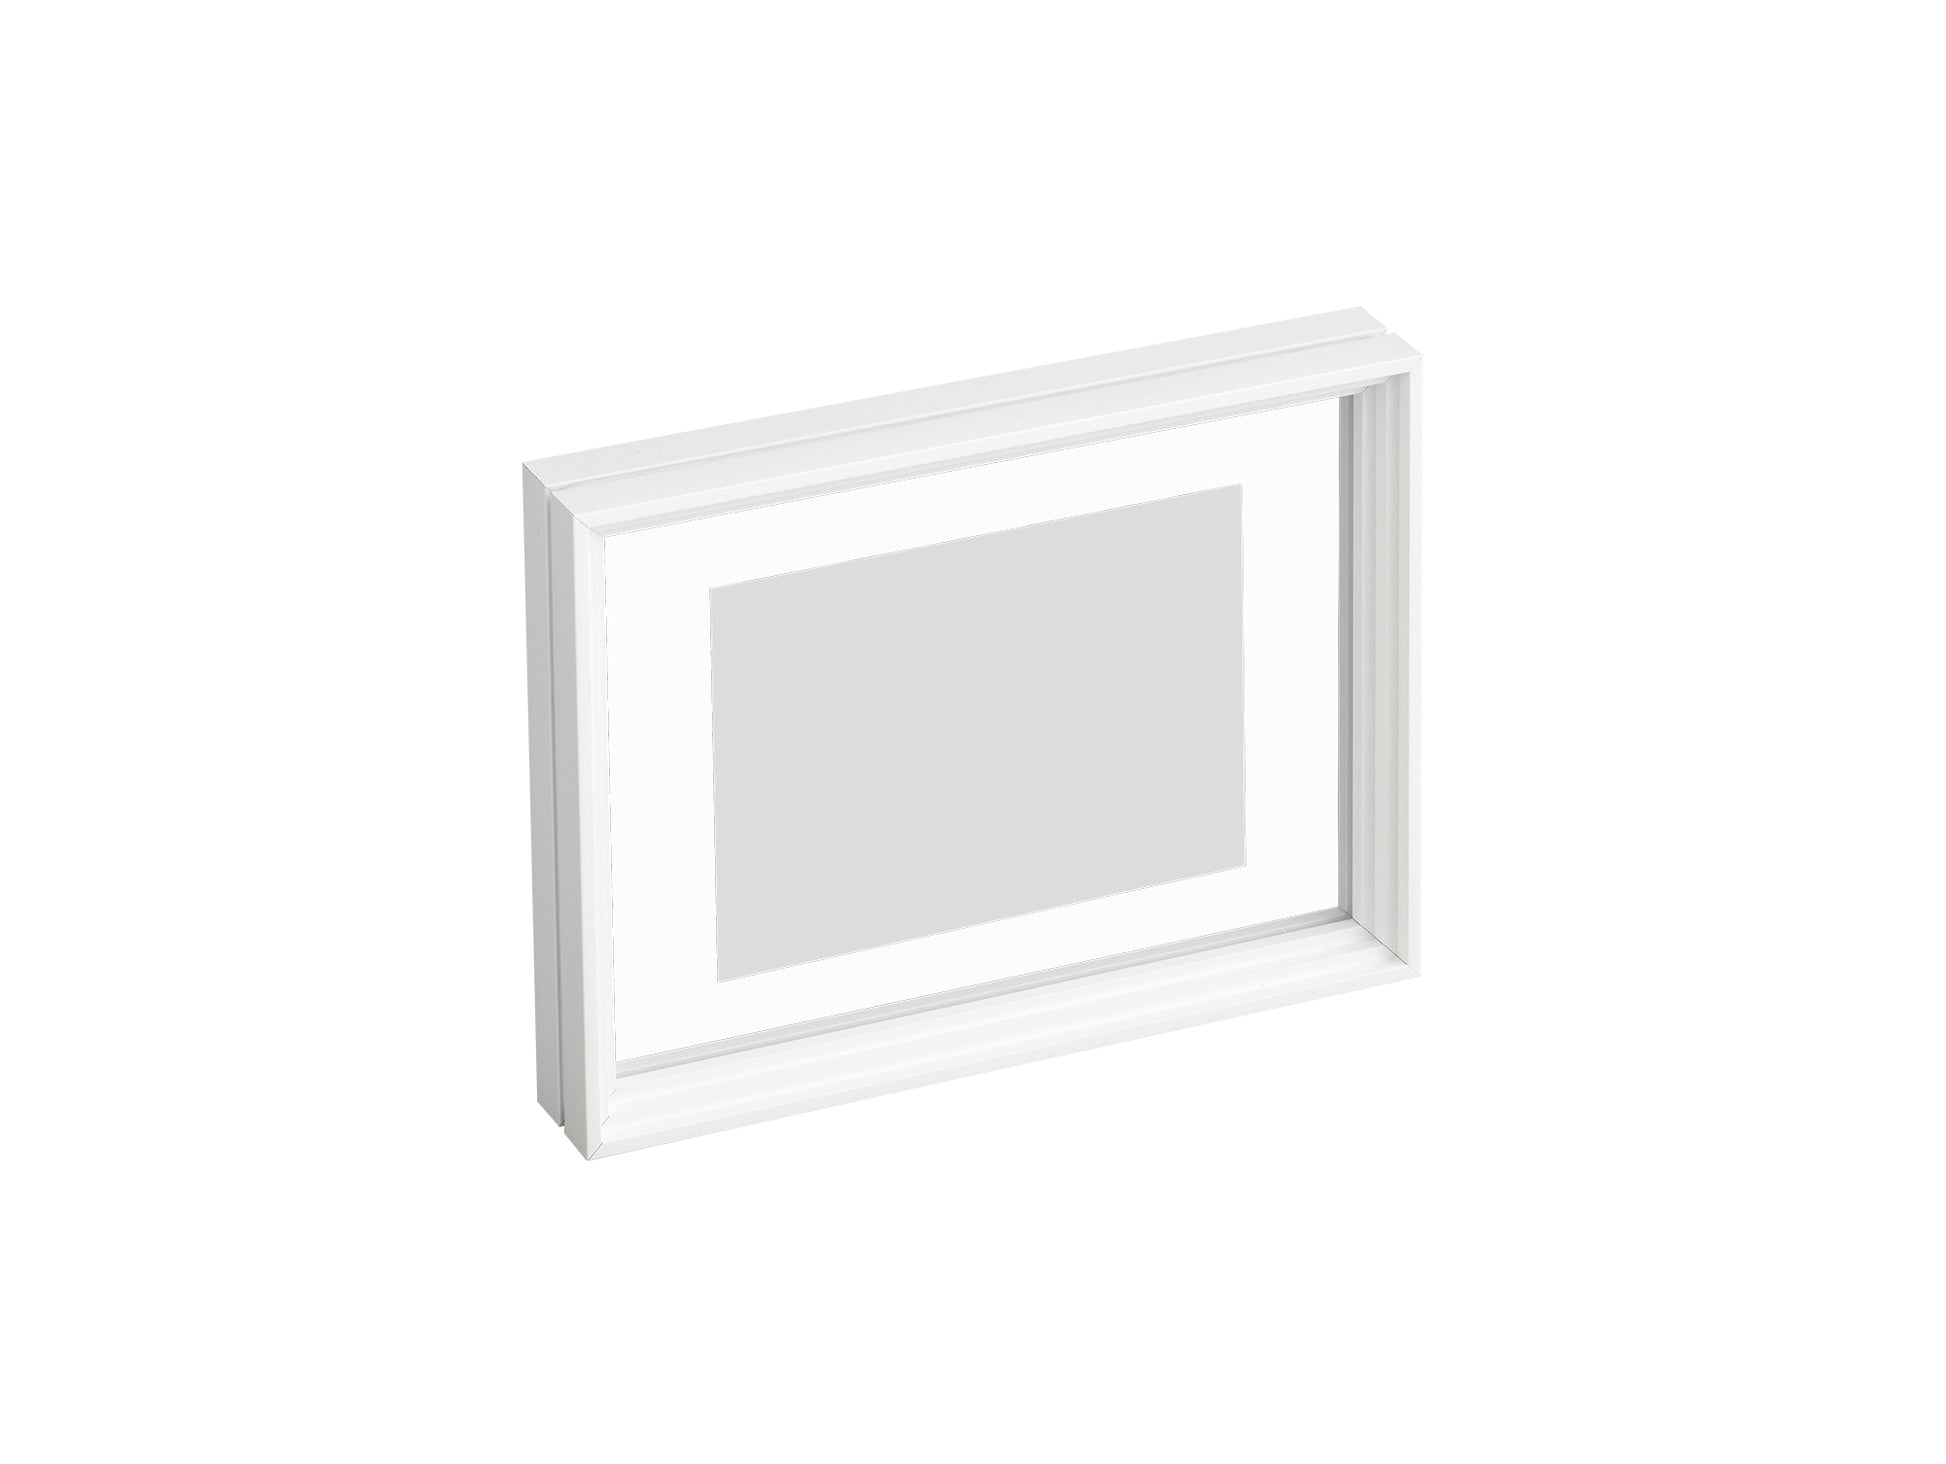 Standing Frame by Moebe - White Aluminium